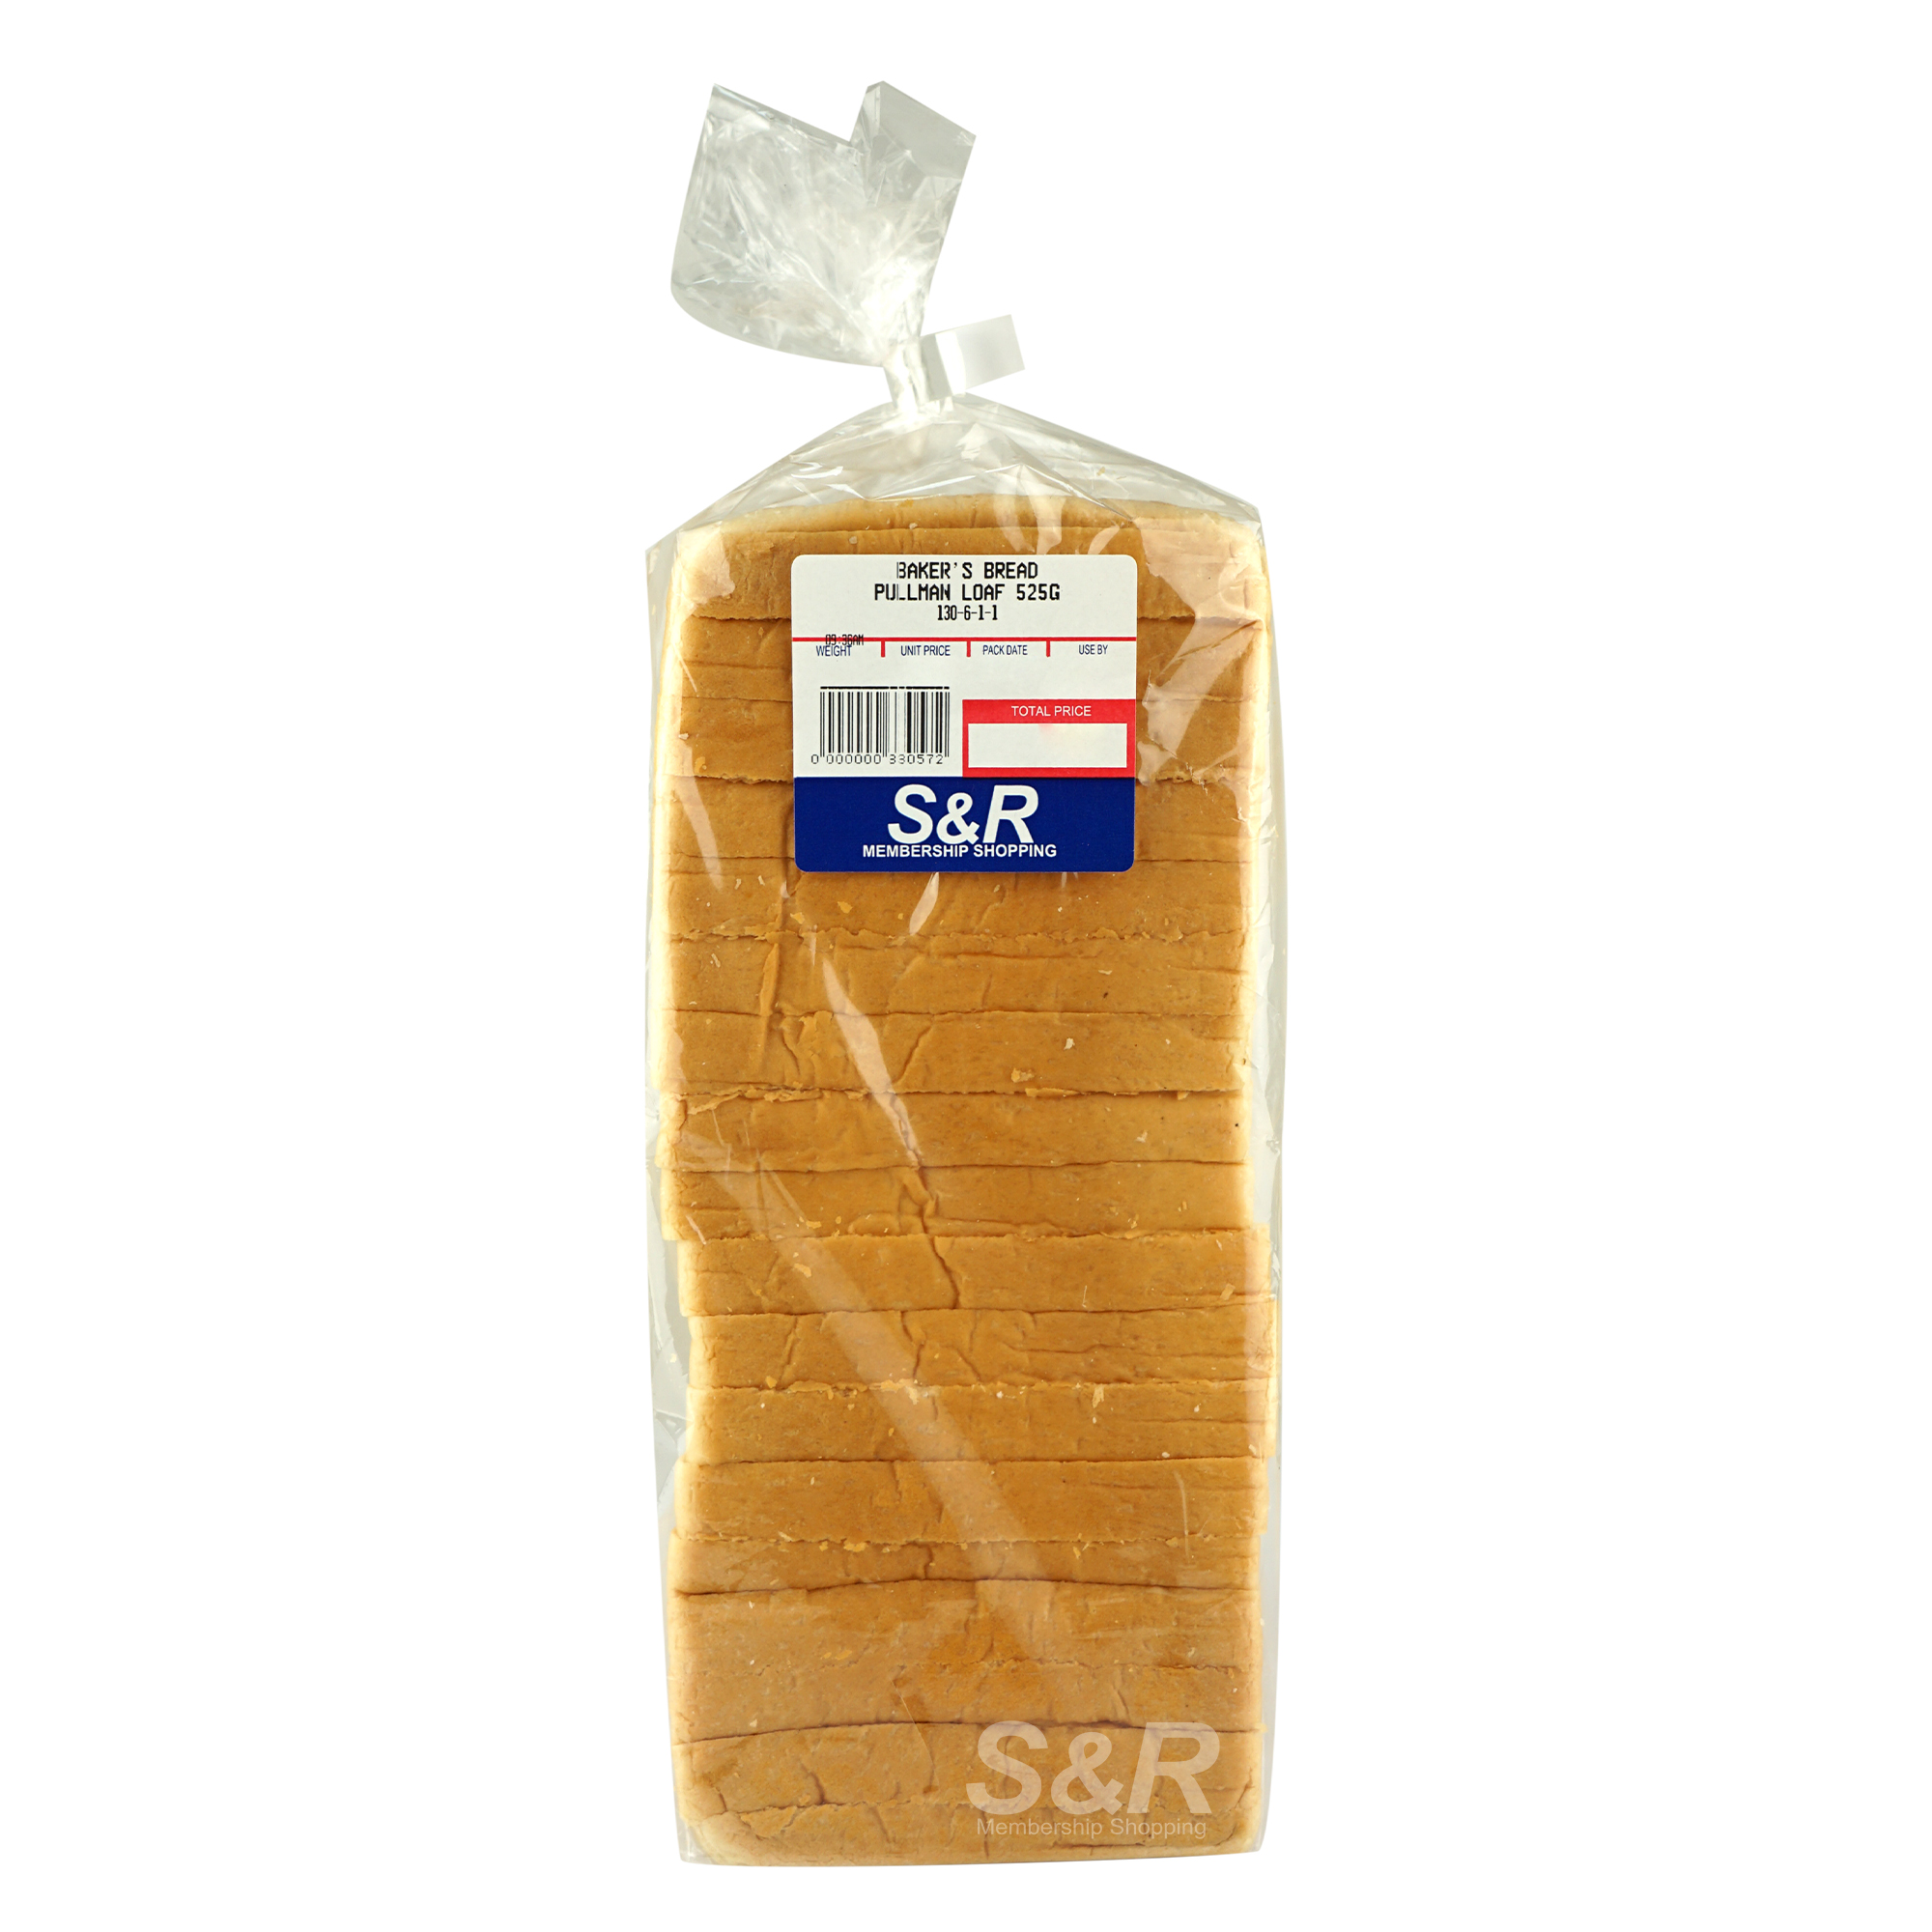 S&R Baker's Bread Pullman Loaf 525g